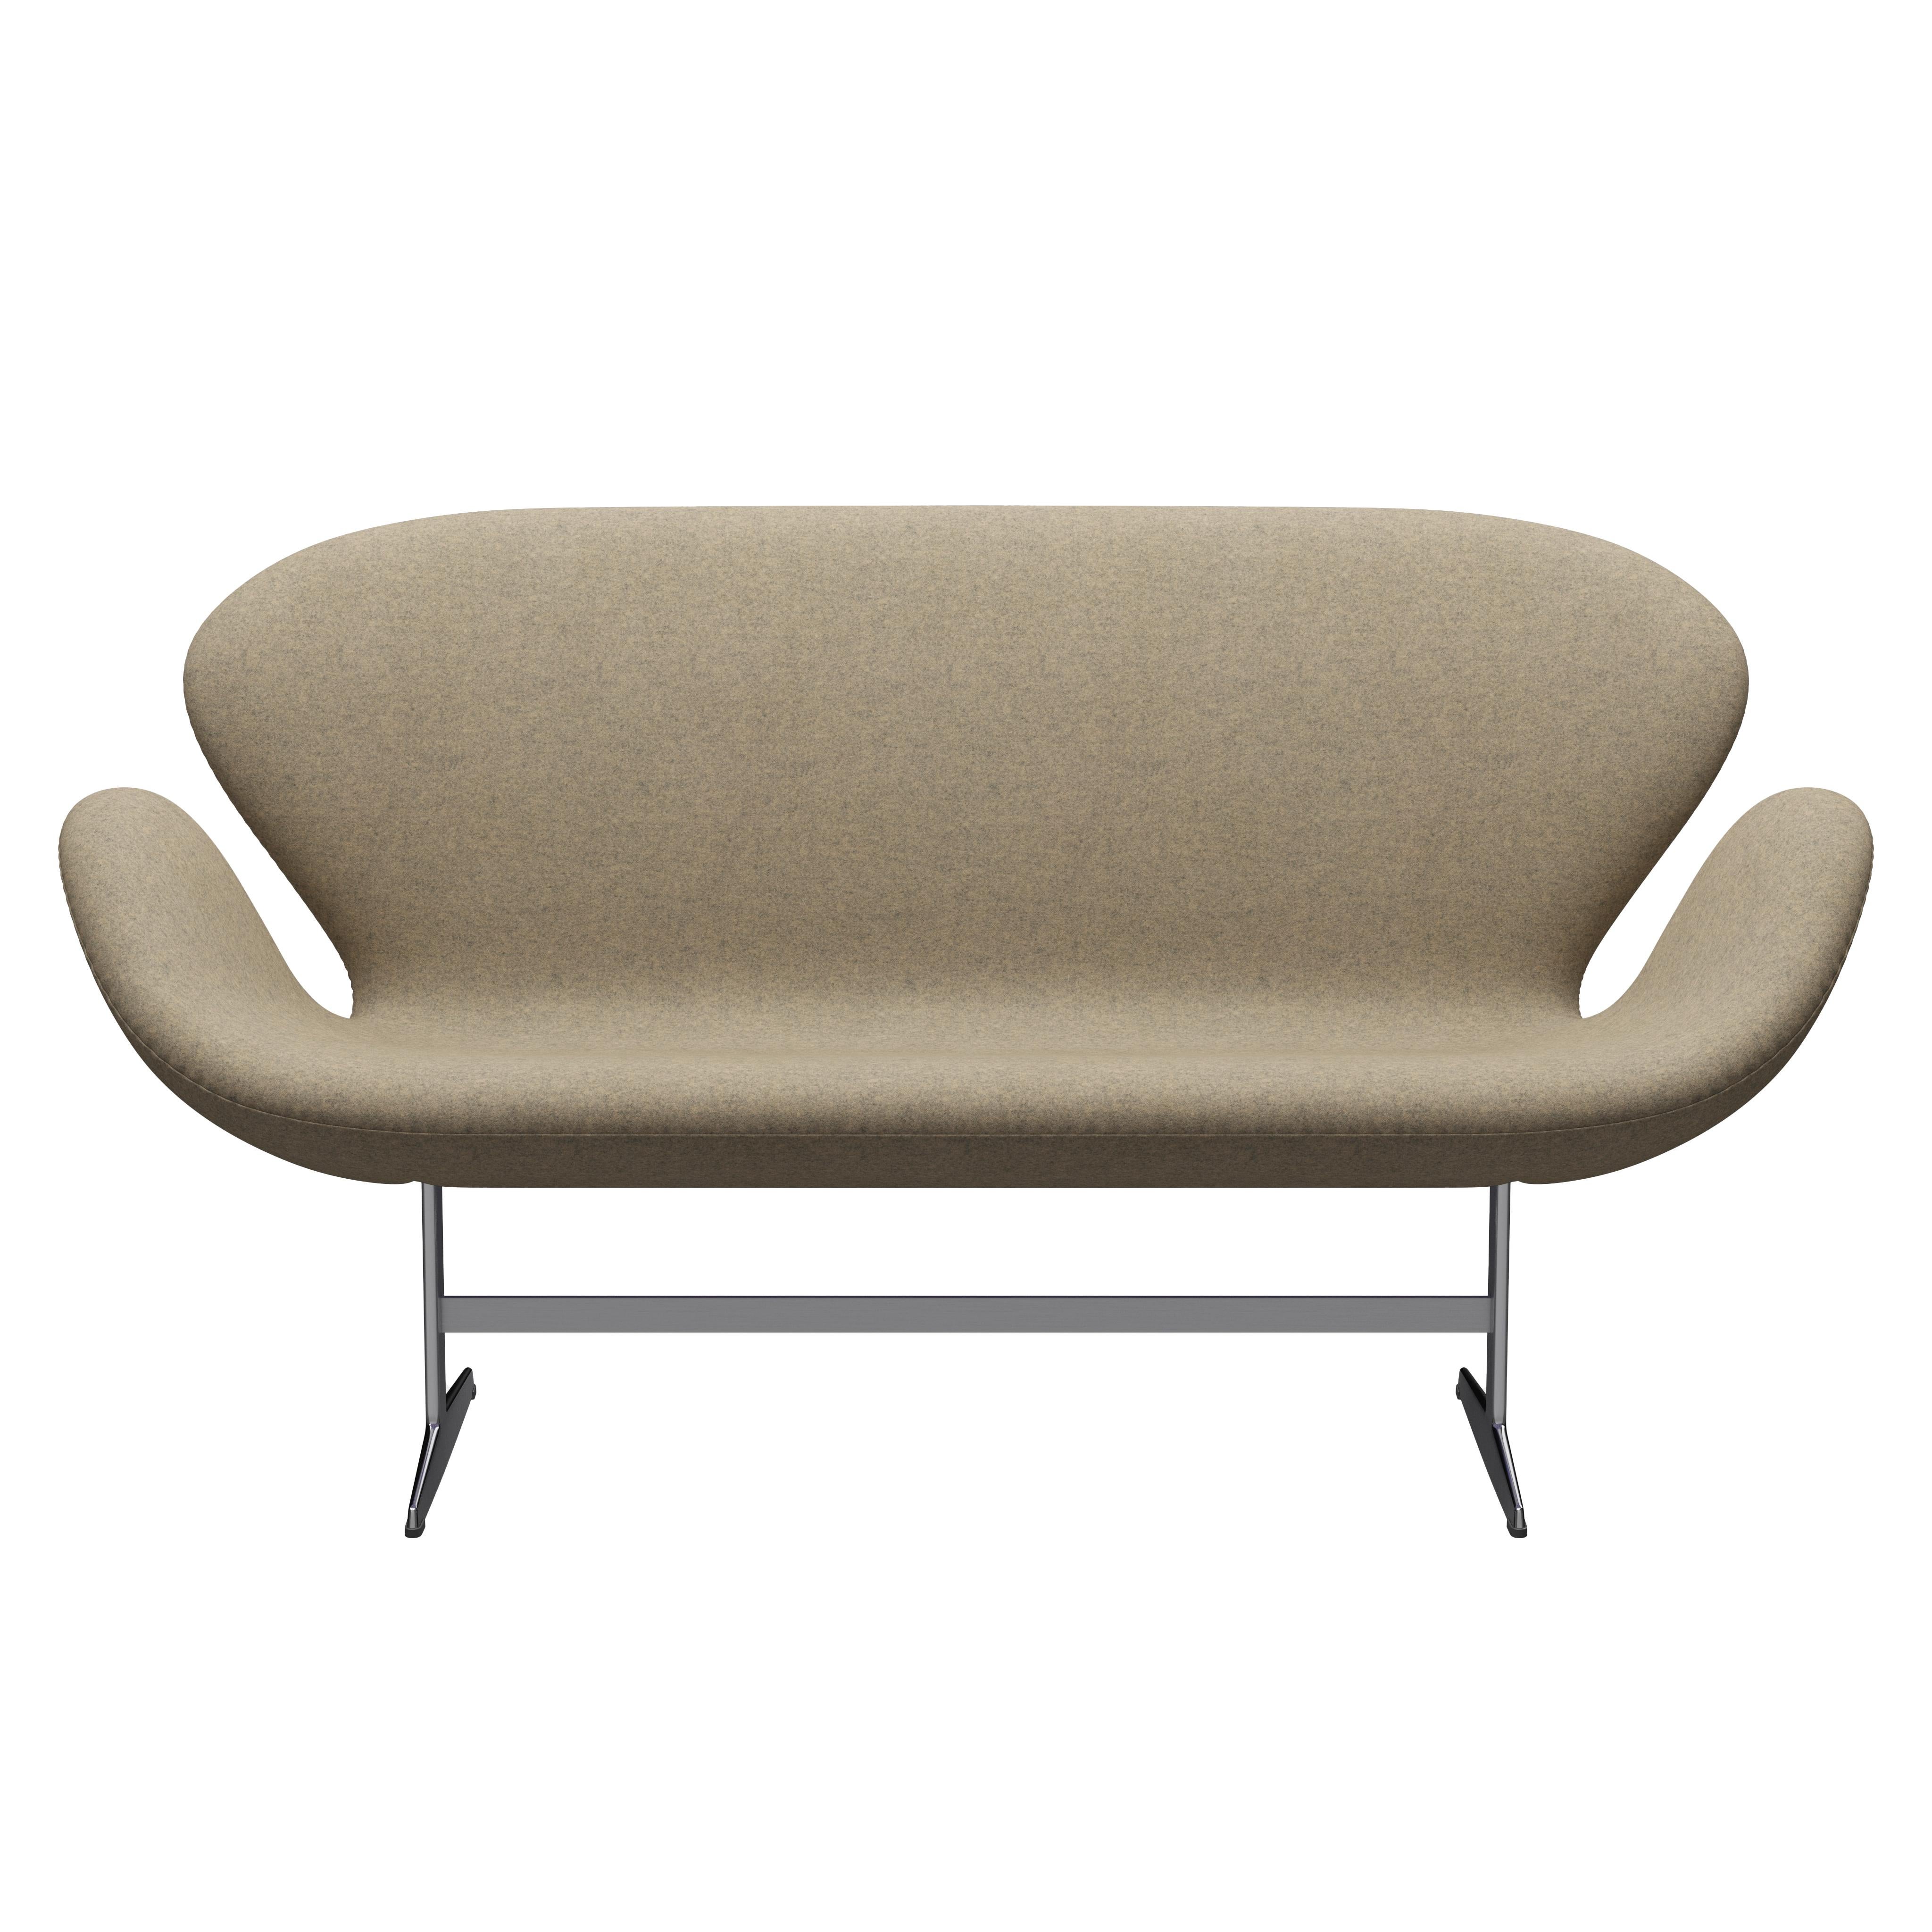 Contemporary Arne Jacobsen 'Swan' Sofa for Fritz Hansen in Fabric Upholstery (Cat. 2) For Sale